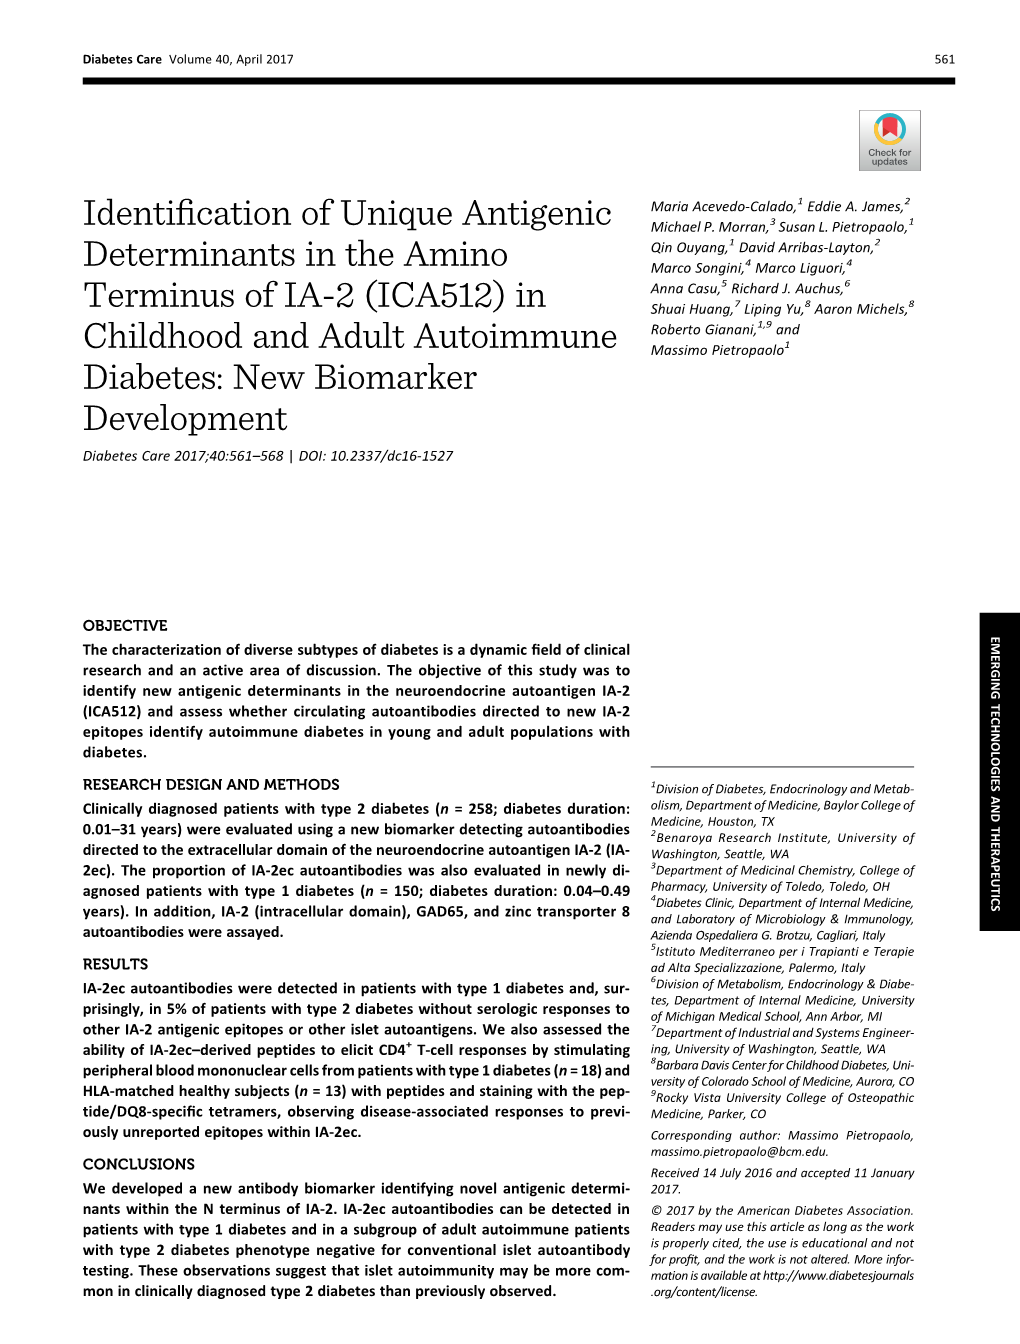 Identification of Unique Antigenic Determinants in The